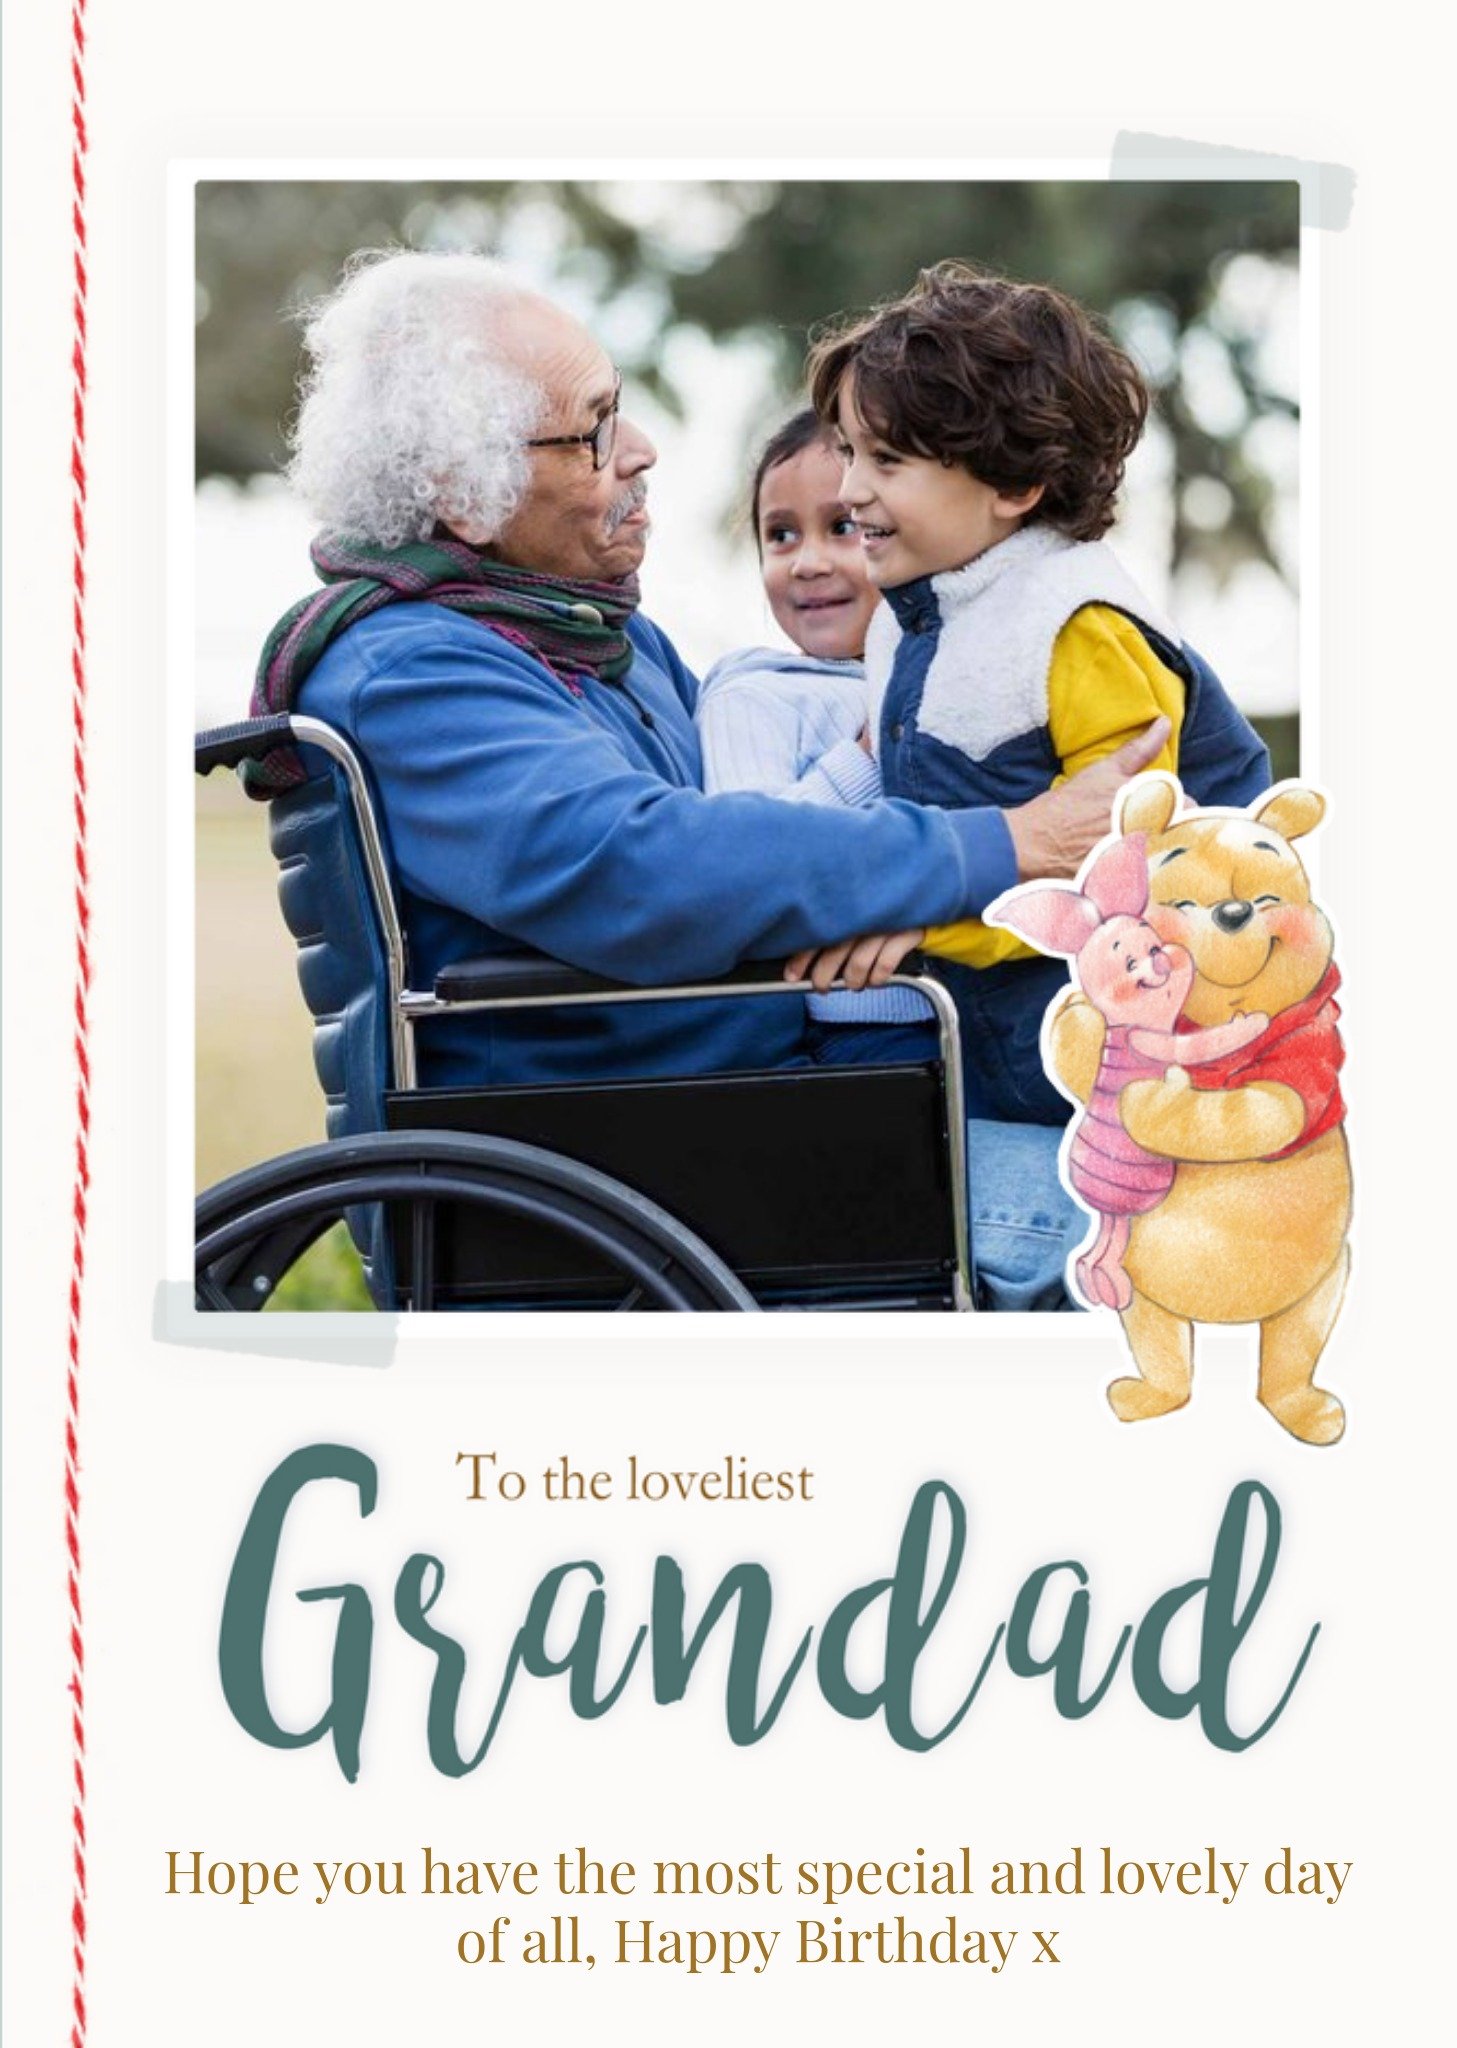 Disney Winnie The Pooh To The Loveliest Grandad - Photo Upload Birthday Card, Large